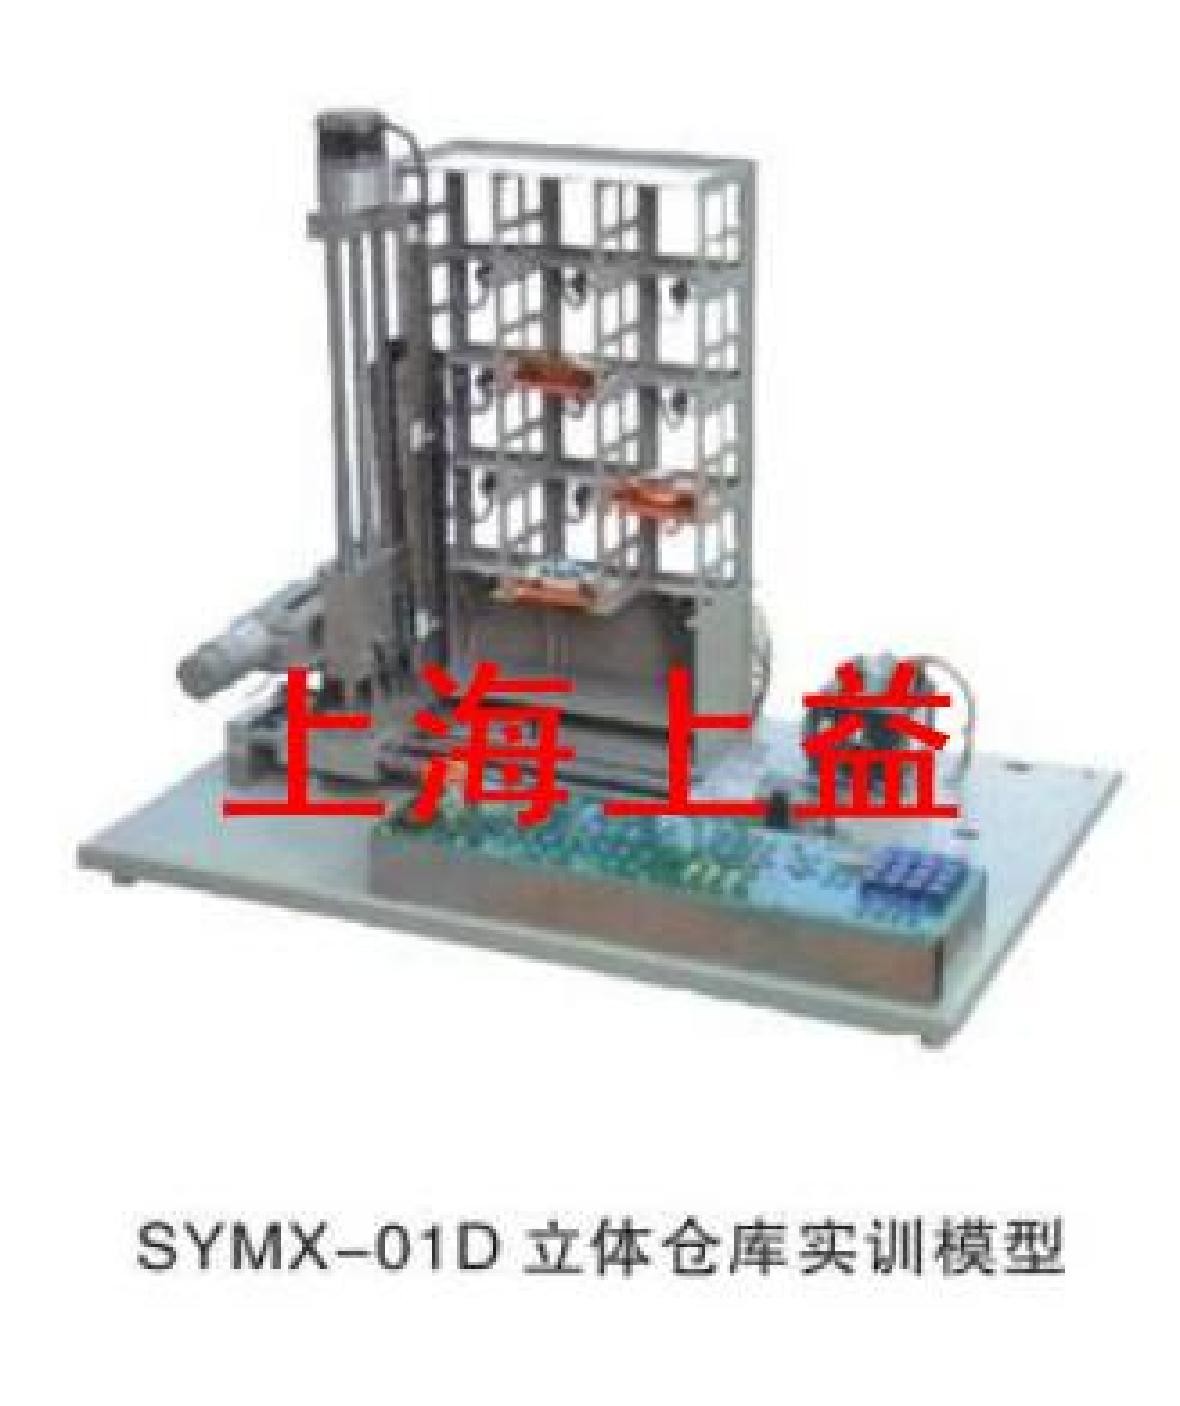 SYMX-01D立體倉庫實物教學實驗裝置